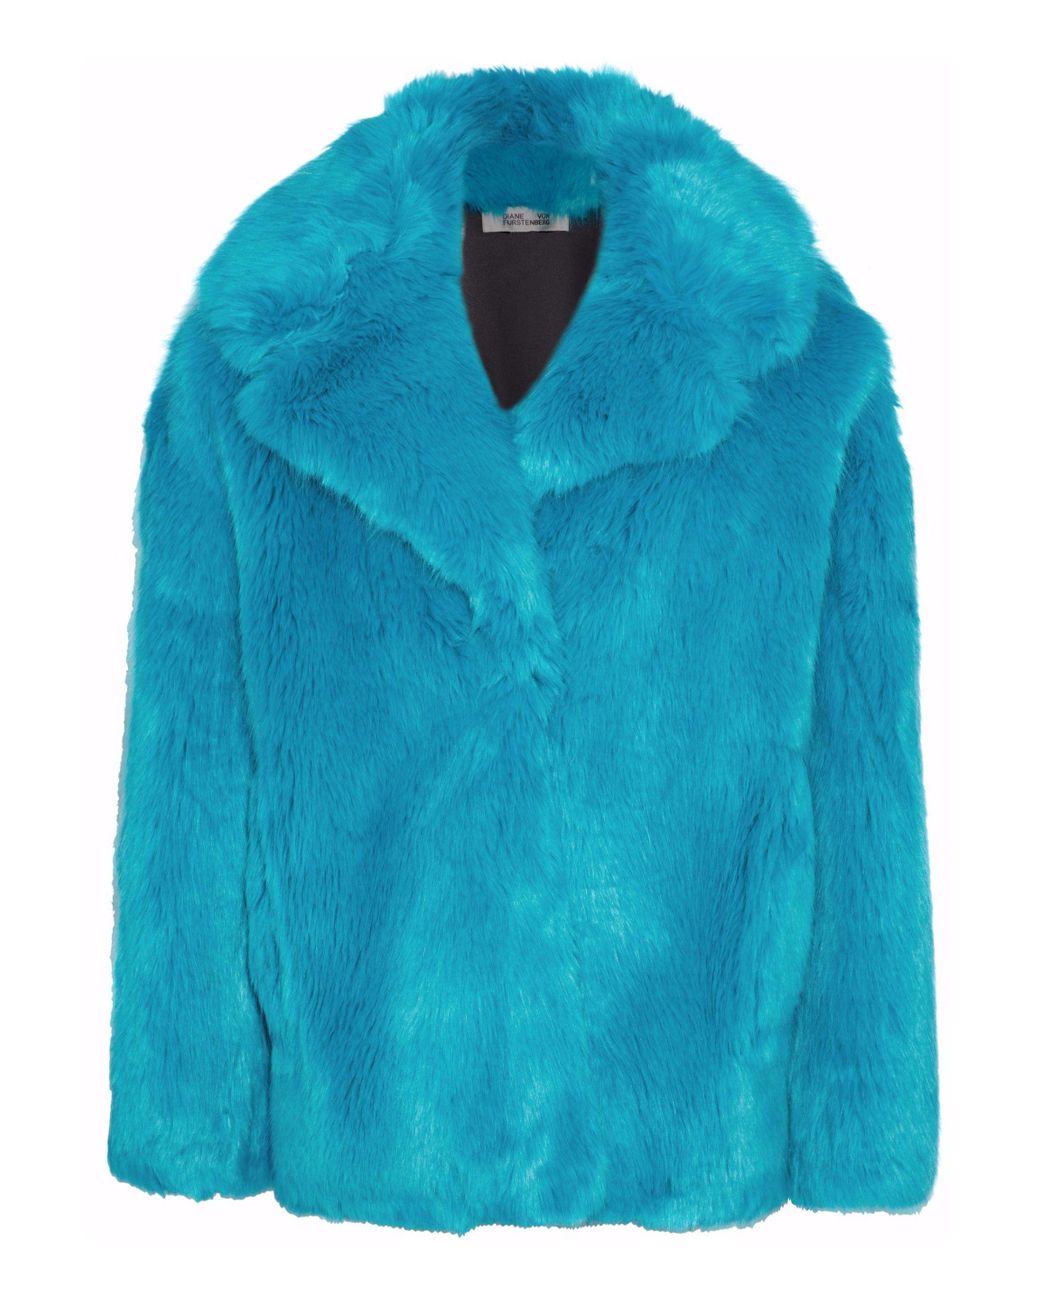 Diane von Furstenberg Faux Fur Coat Turquoise in Blue | Lyst